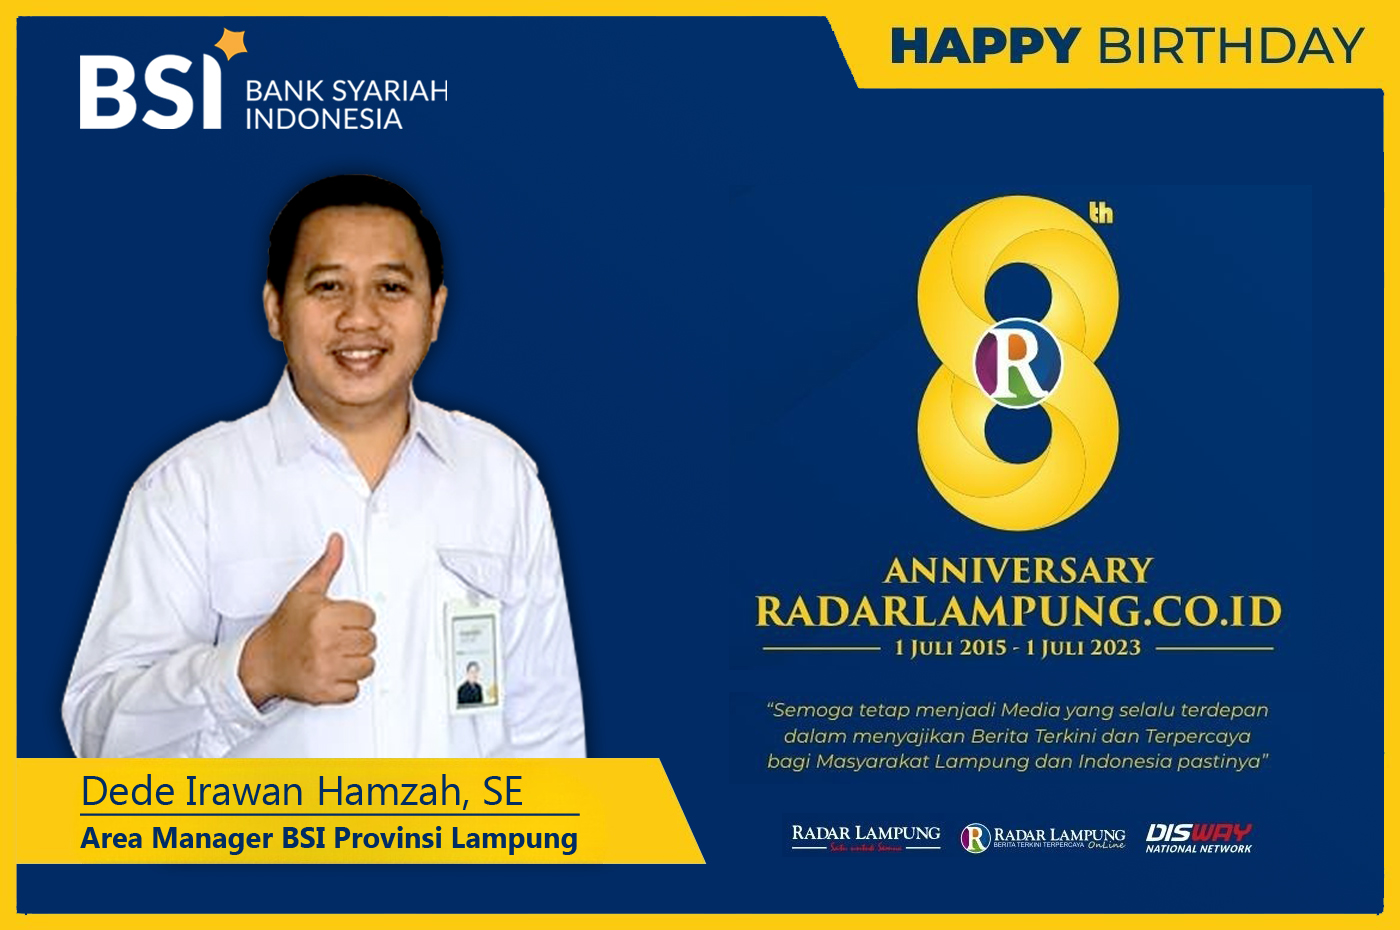 Dede Irawan Hamzah: Selamat Ulang Tahun ke 8 Radar Lampung Online